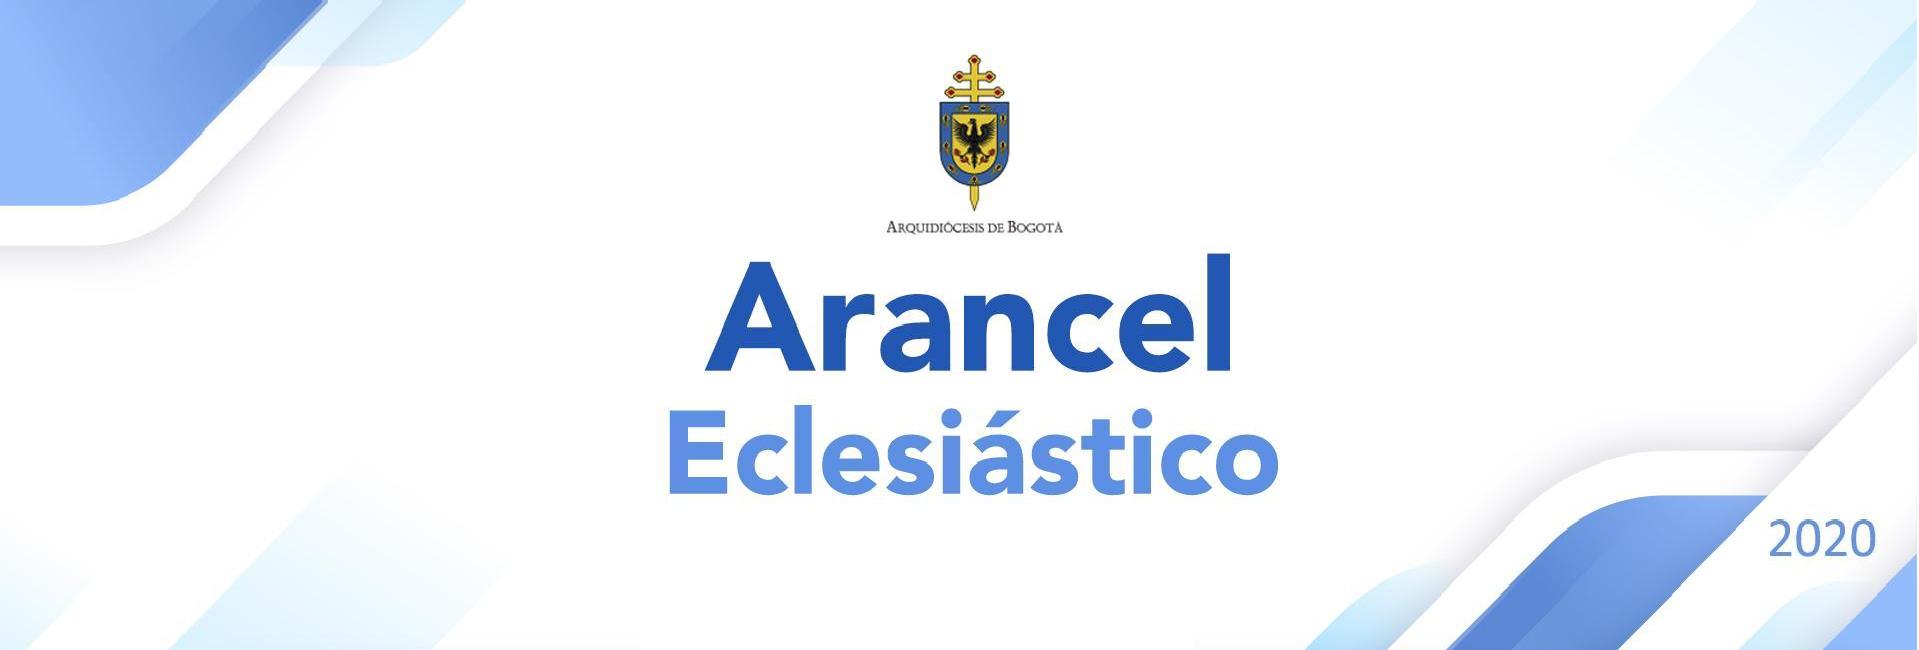 https://arquimedia.s3.amazonaws.com/104/utilitarias/banner-arancel-eclesiastico-2020jpg-1-1919jpg.jpg